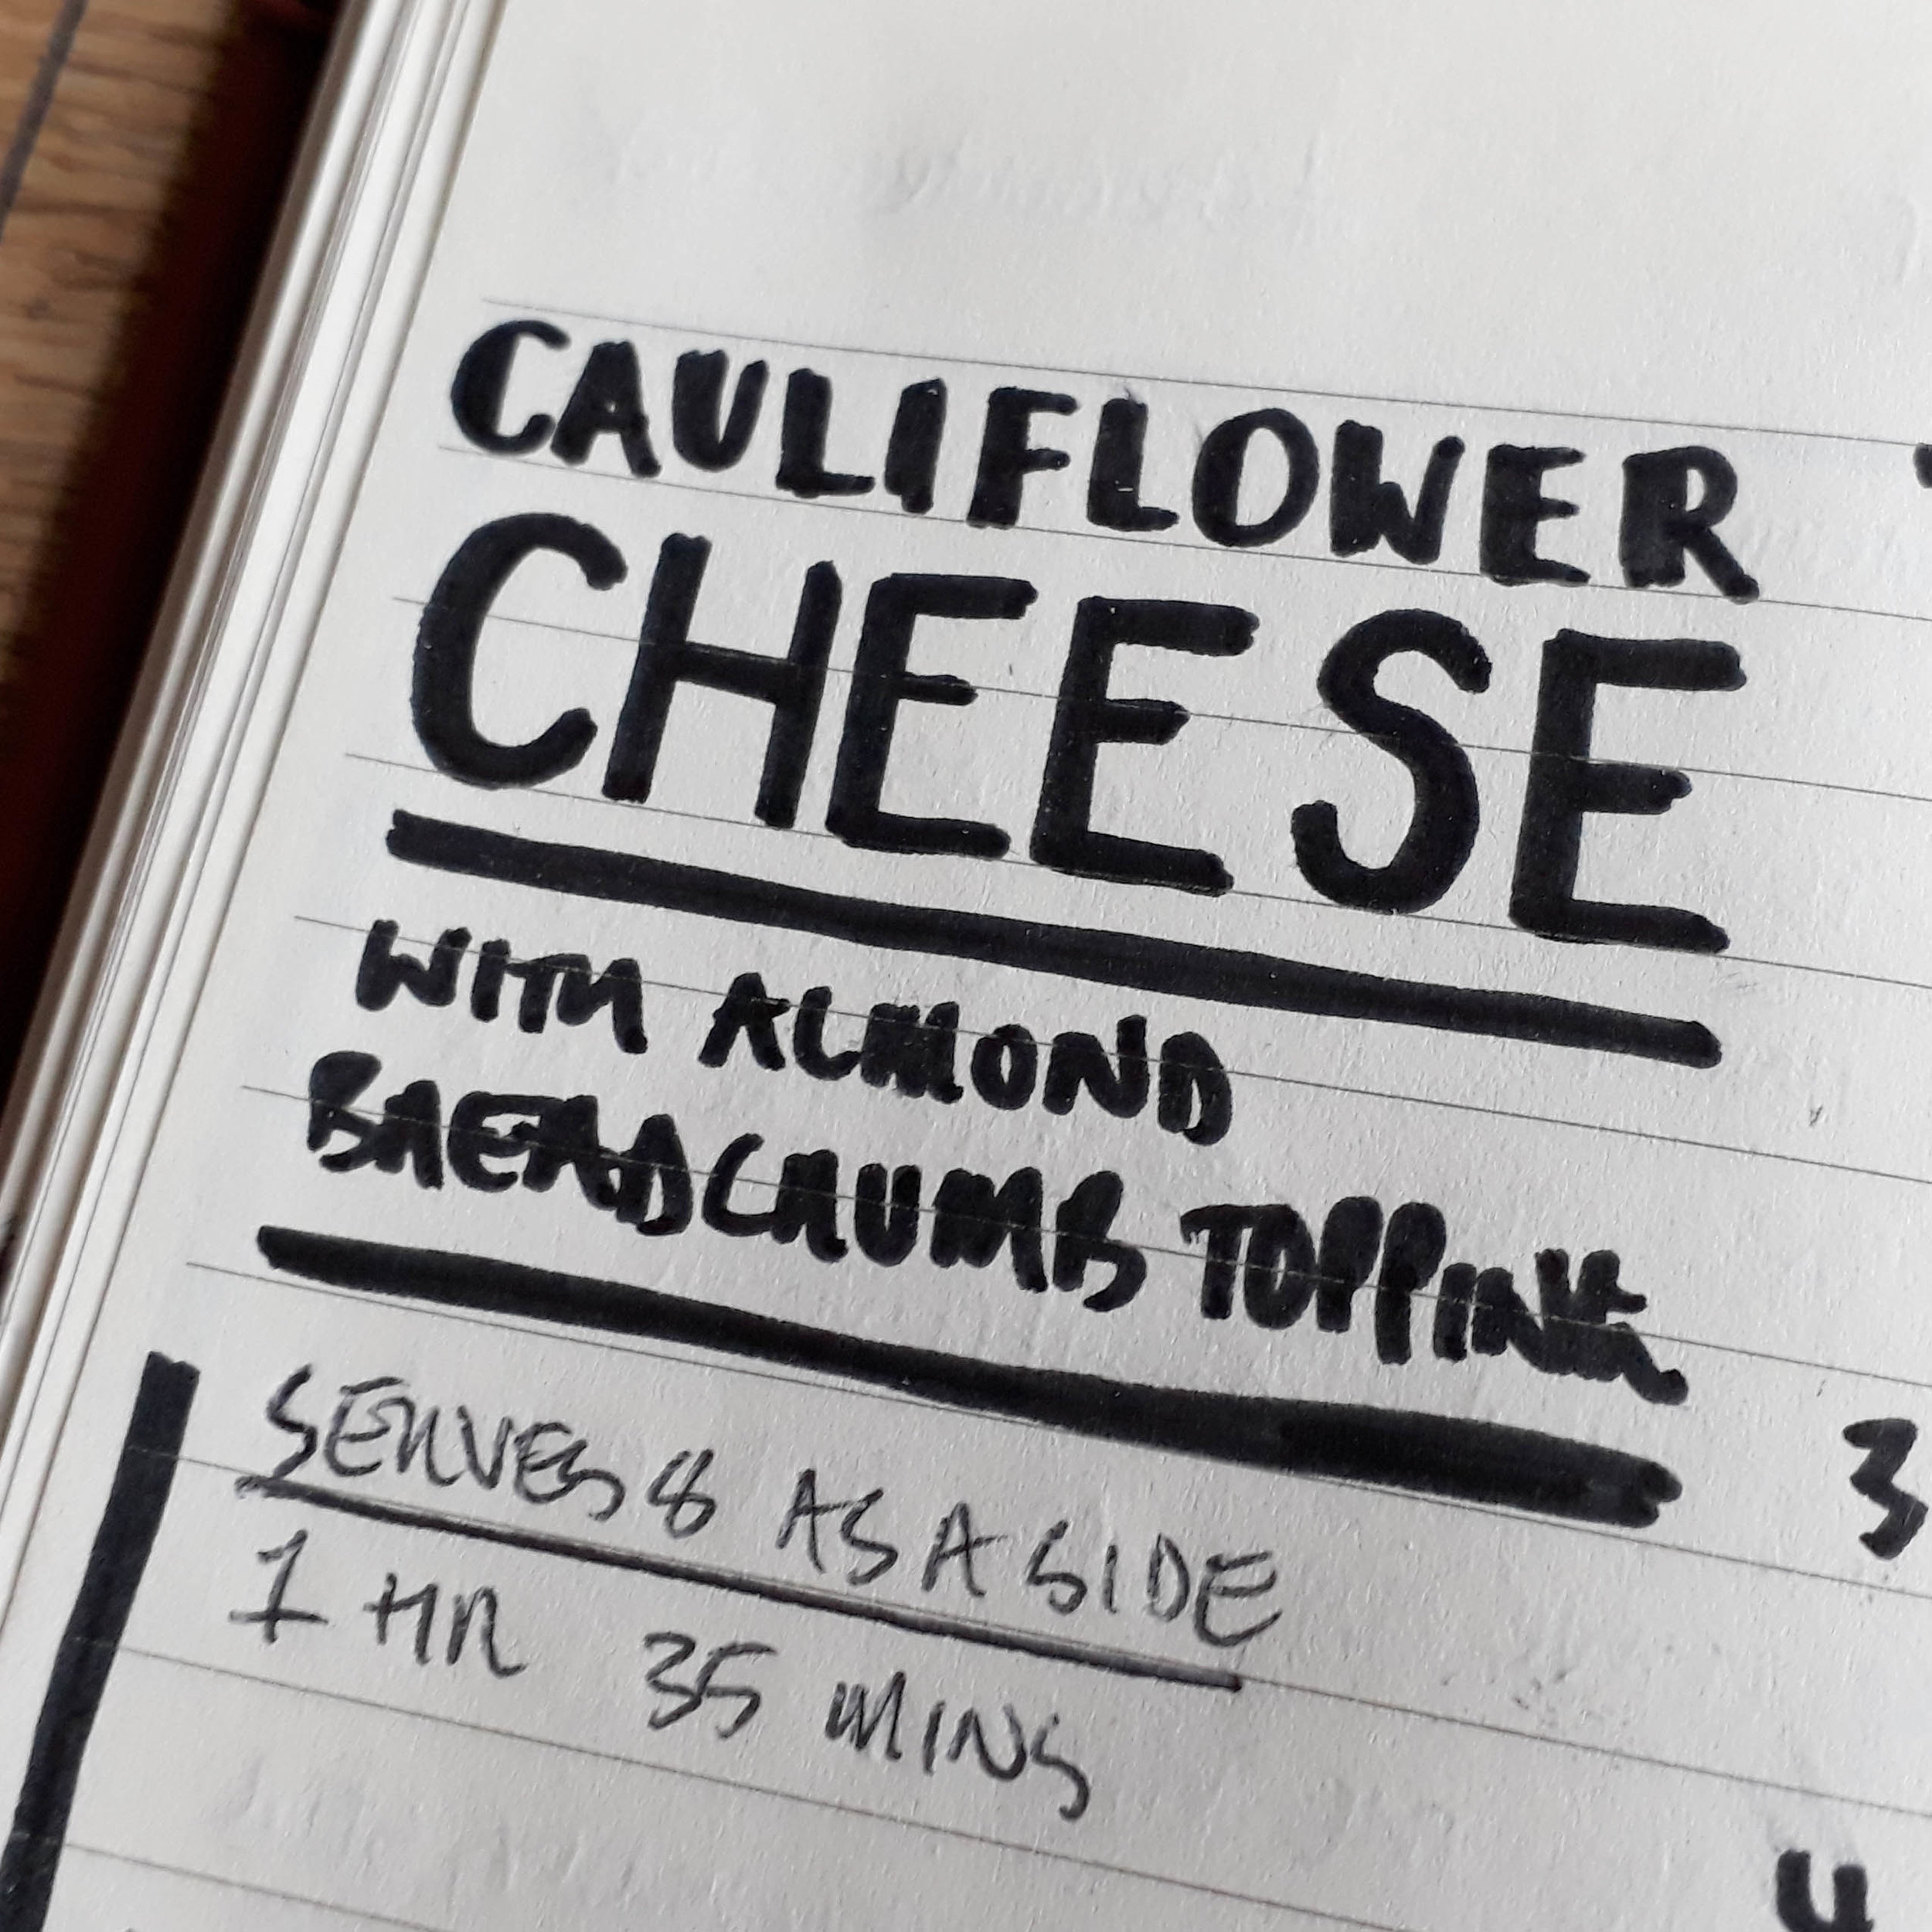 CauliflowerCheese2.jpg